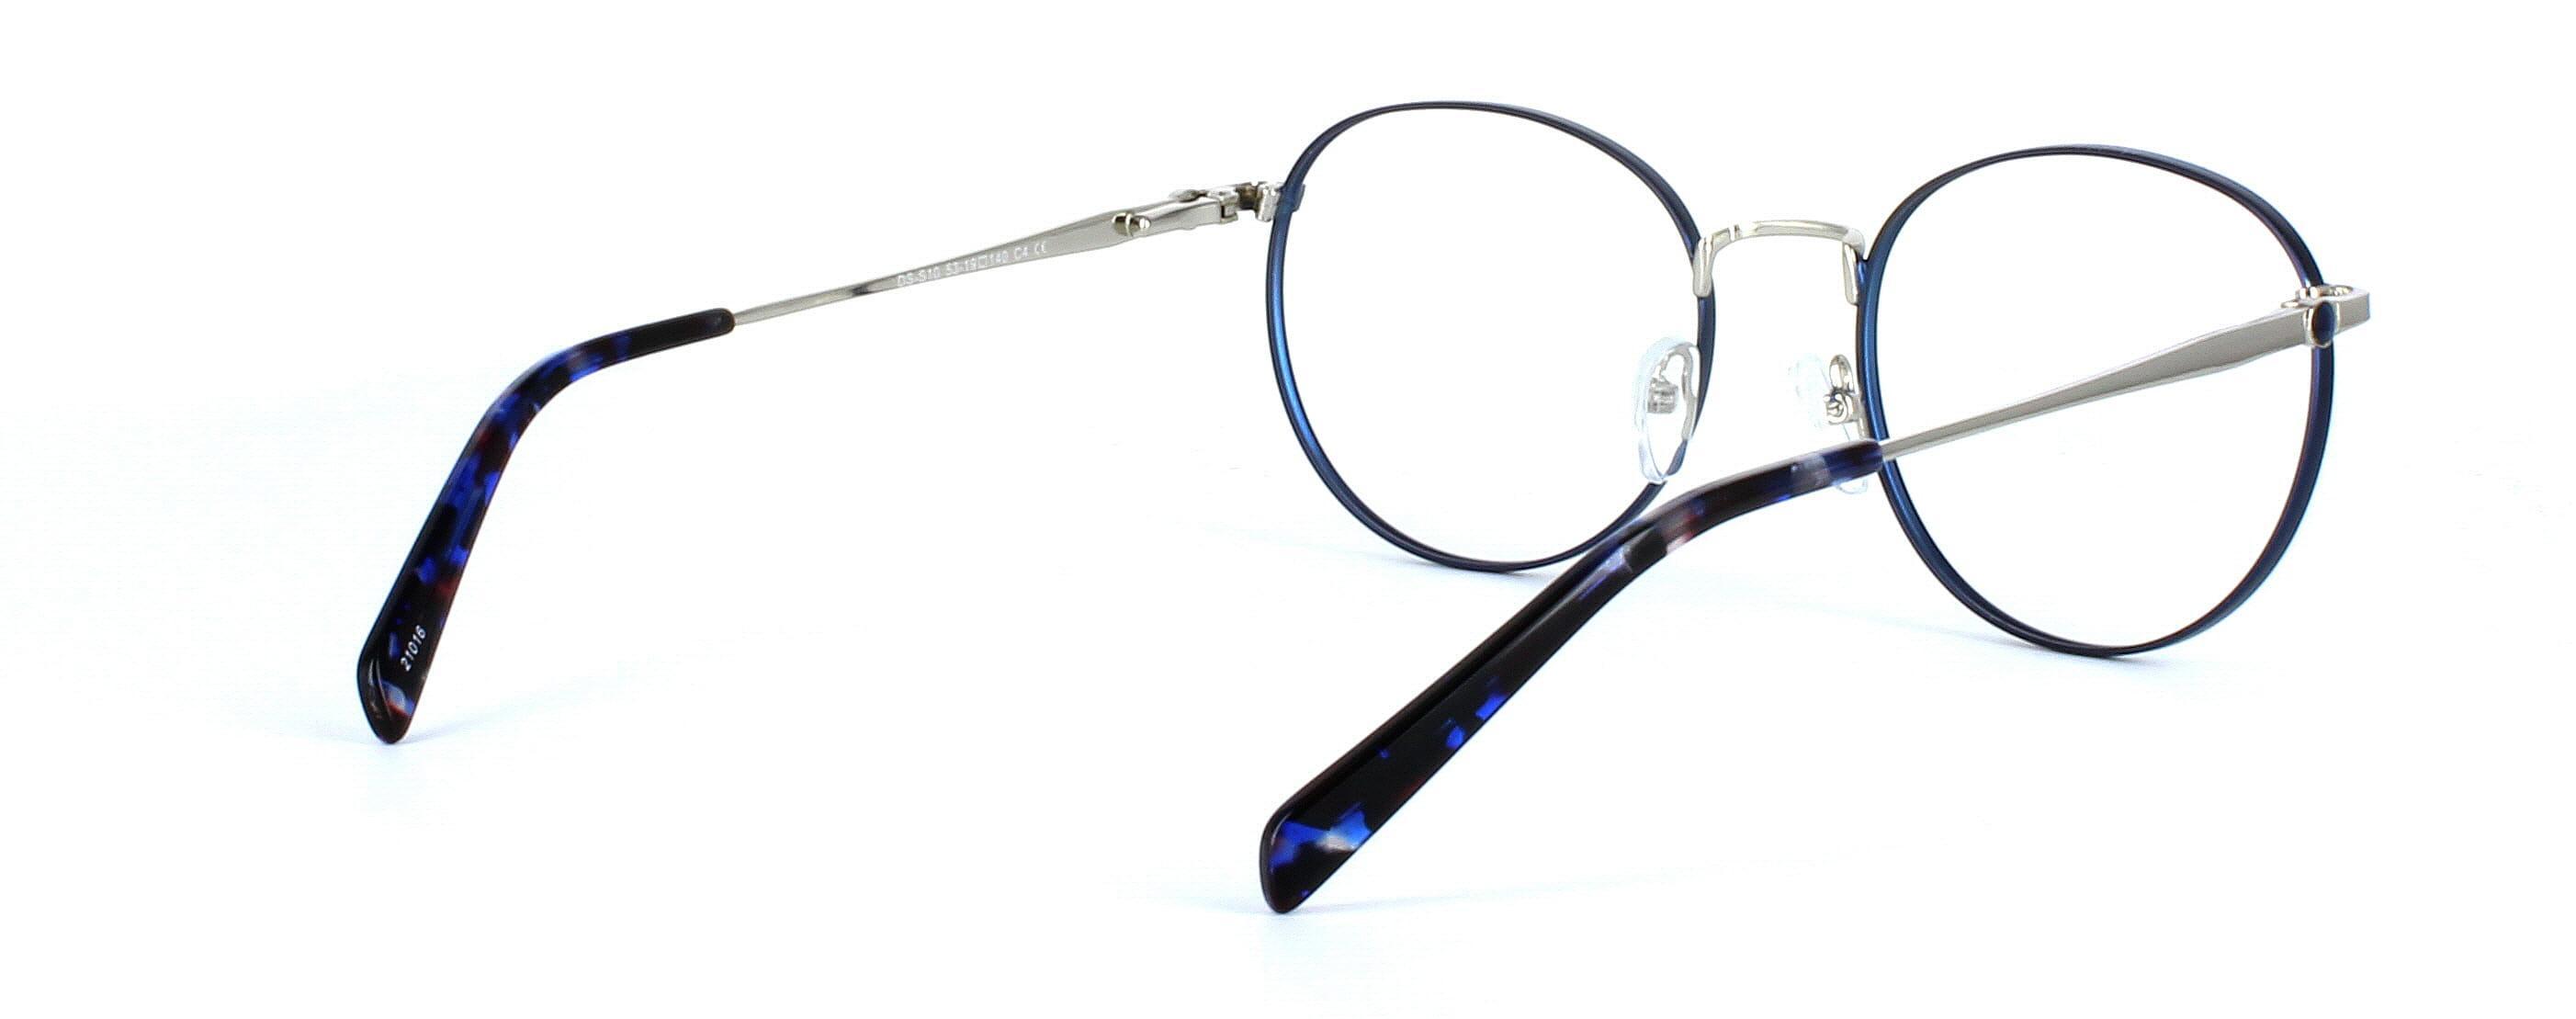 Borealis - Ladies 2-tone round metal glasses - blue & silver - image 4